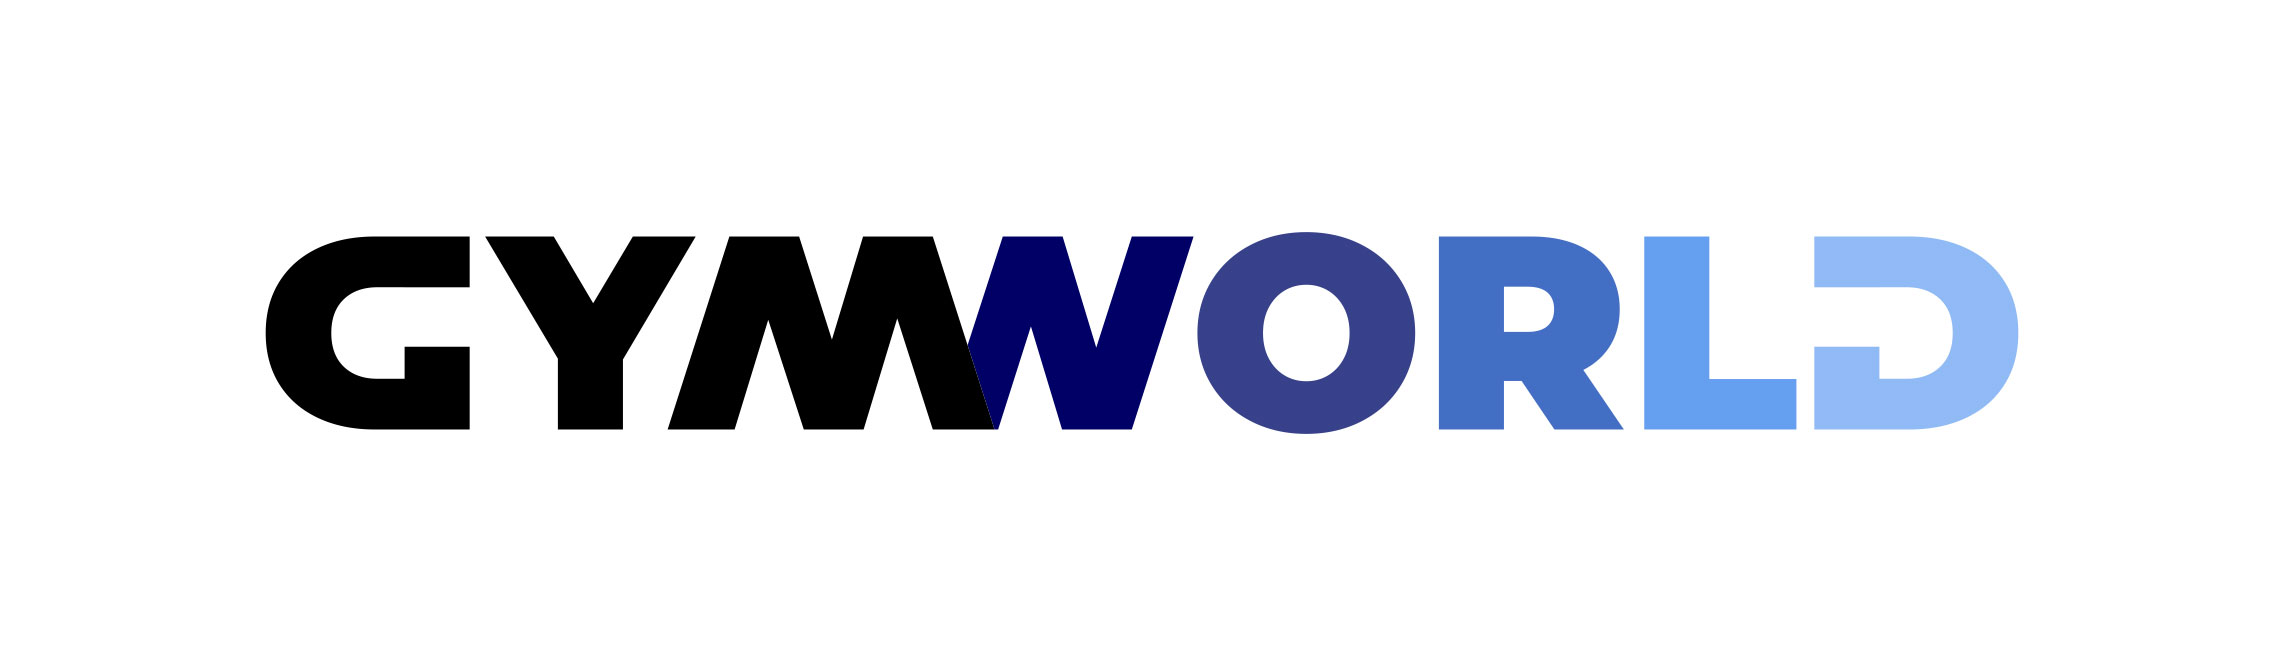 Gymworld logo